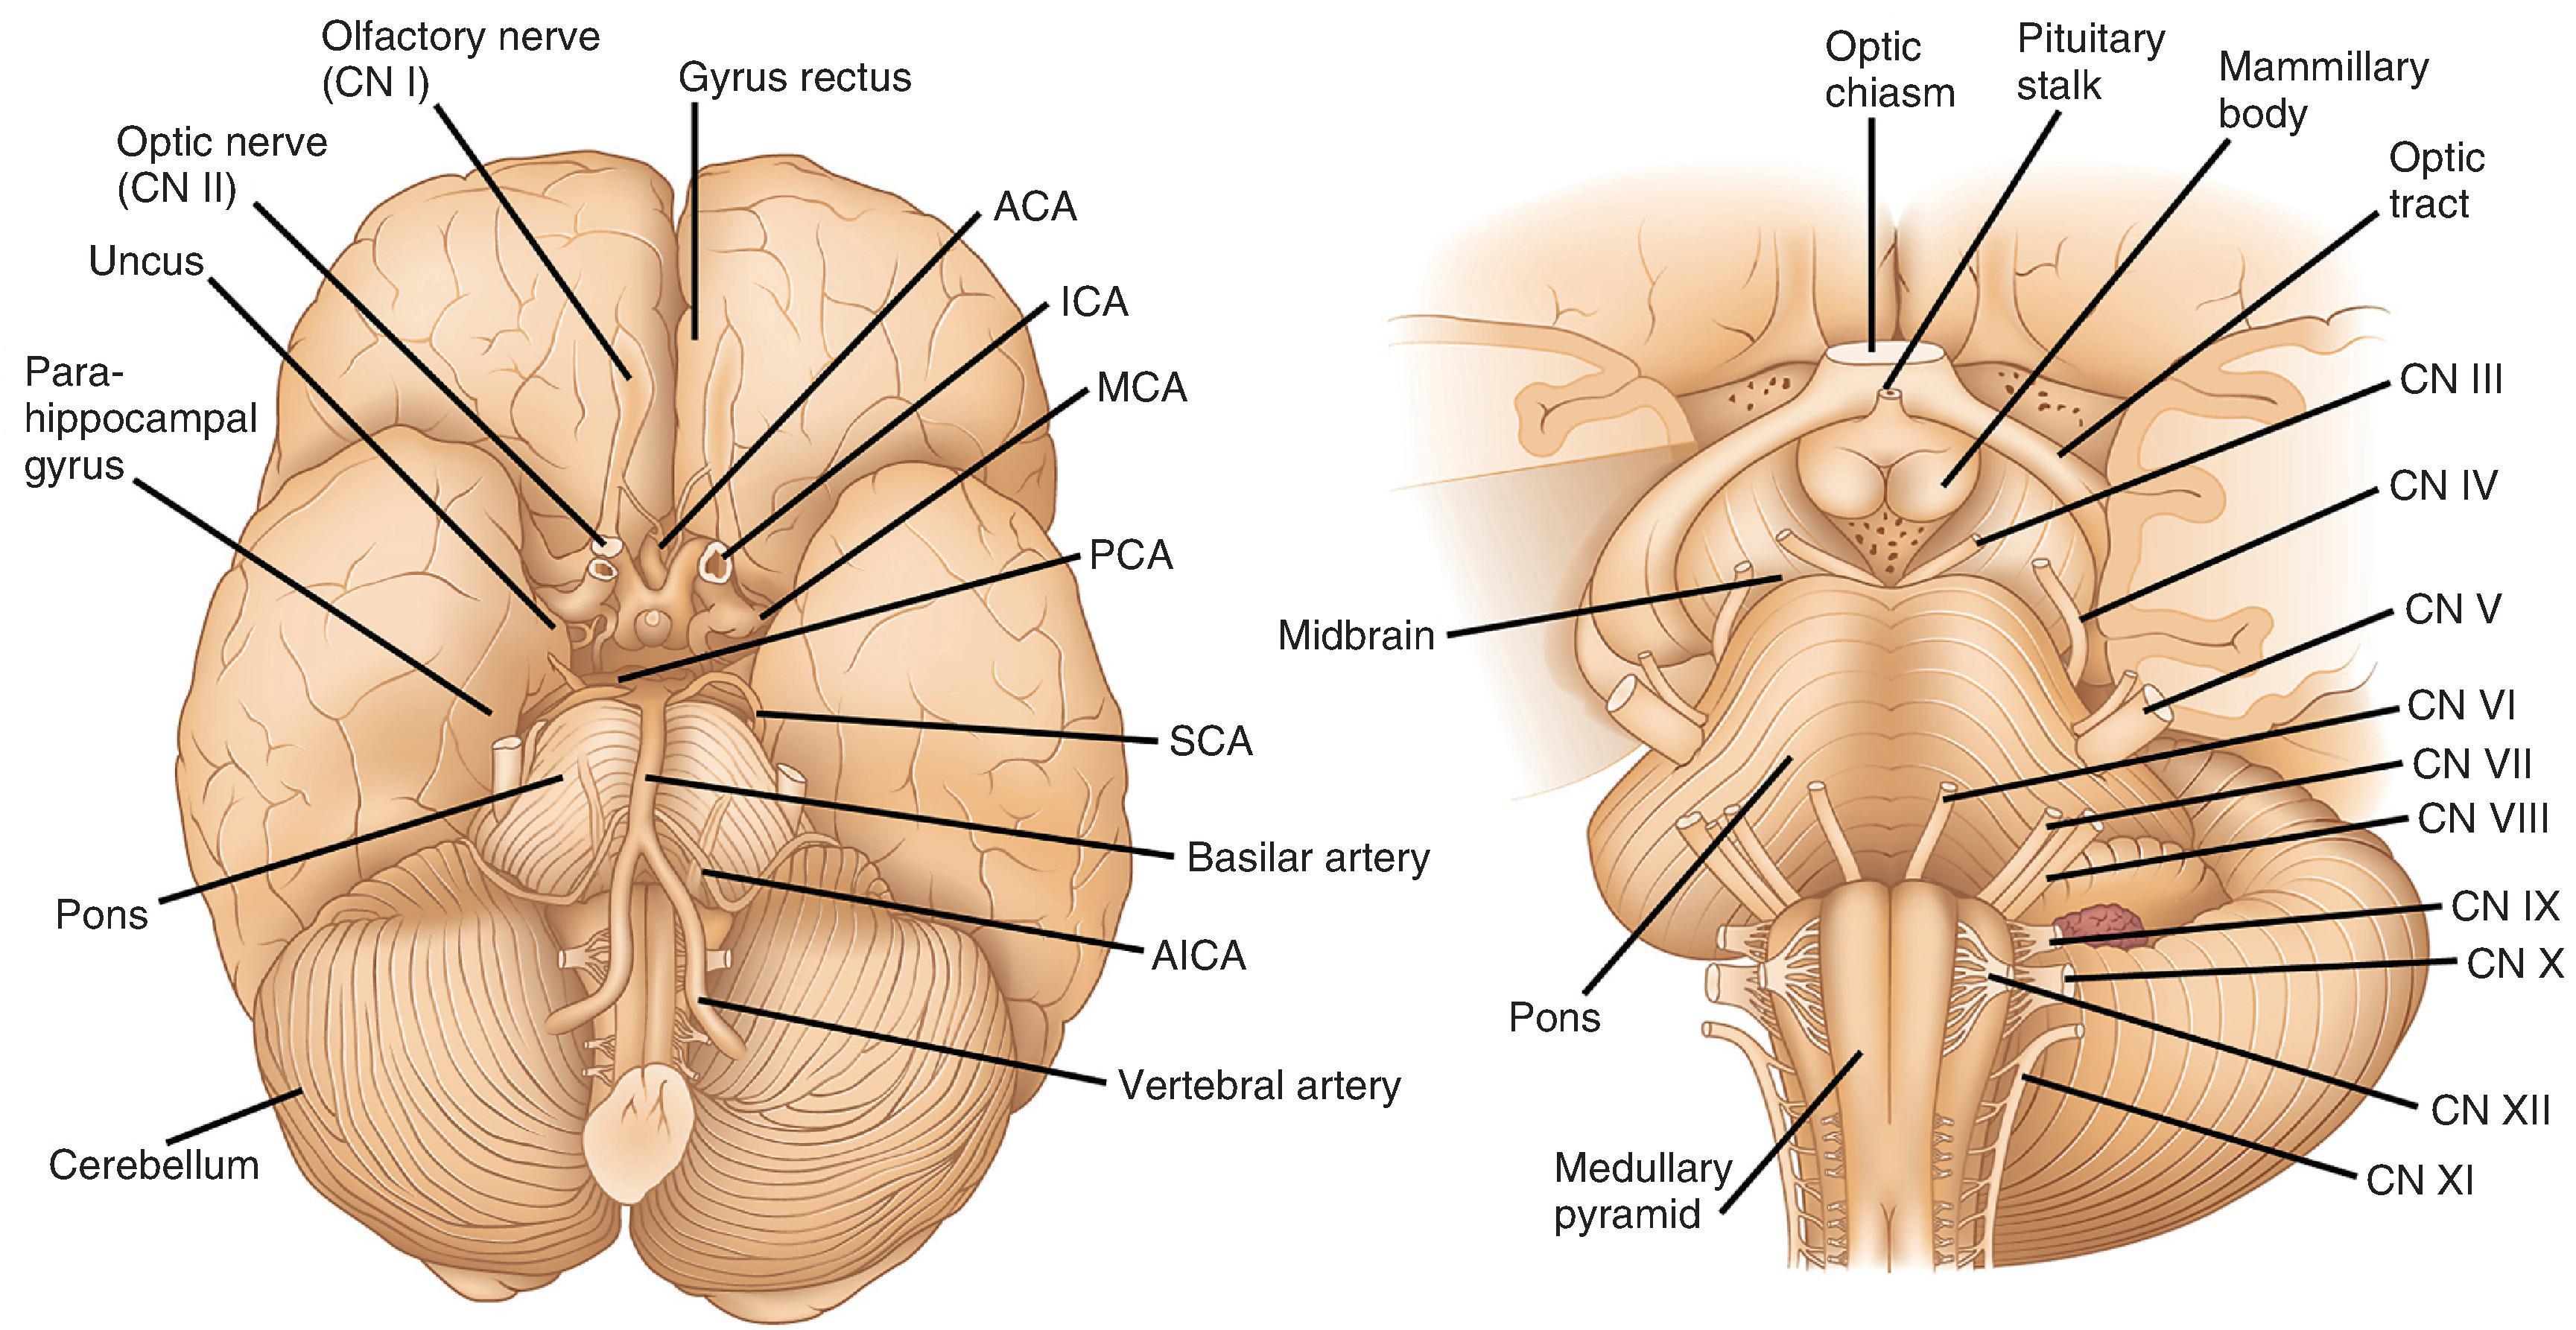 FIGure 1.3, Inferior and ventral views of the brain surface. ACA, anterior cerebral artery; AICA, anterior inferior cerebellar artery; CN, cranial nerve; ICA, internal carotid artery; MCA, middle cerebral artery; PCA, posterior cerebral artery; SCA, superior cerebellar artery.